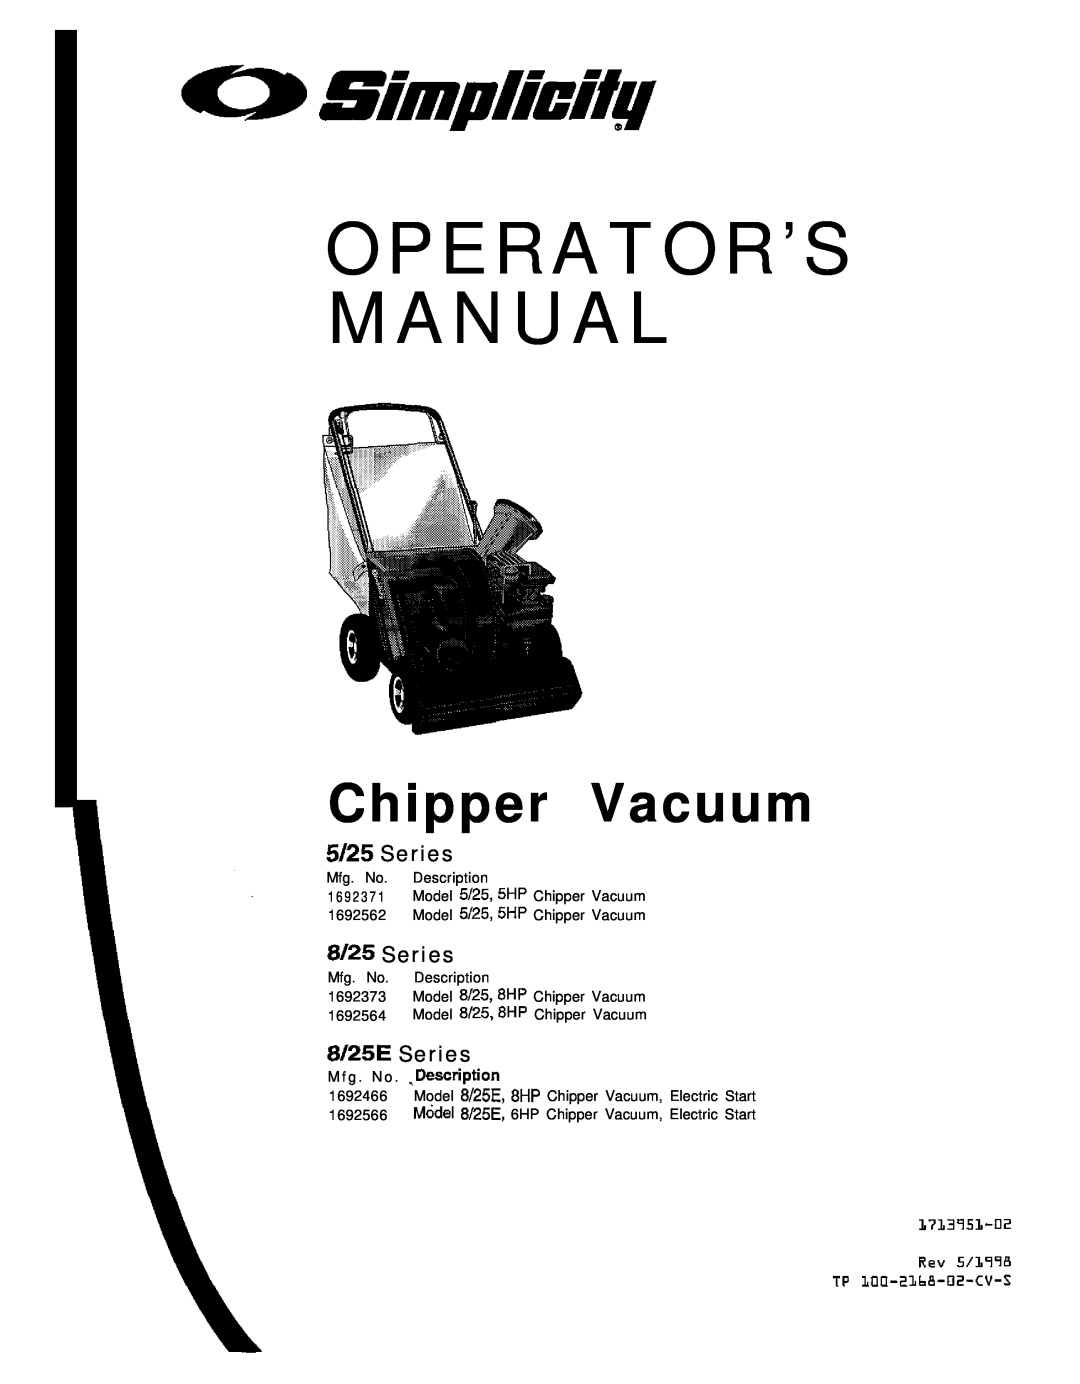 Simplicity 6/25 manual Operator’S Manual, Chipper Vacuum, 8/25E Series, 0sziip!c!g 